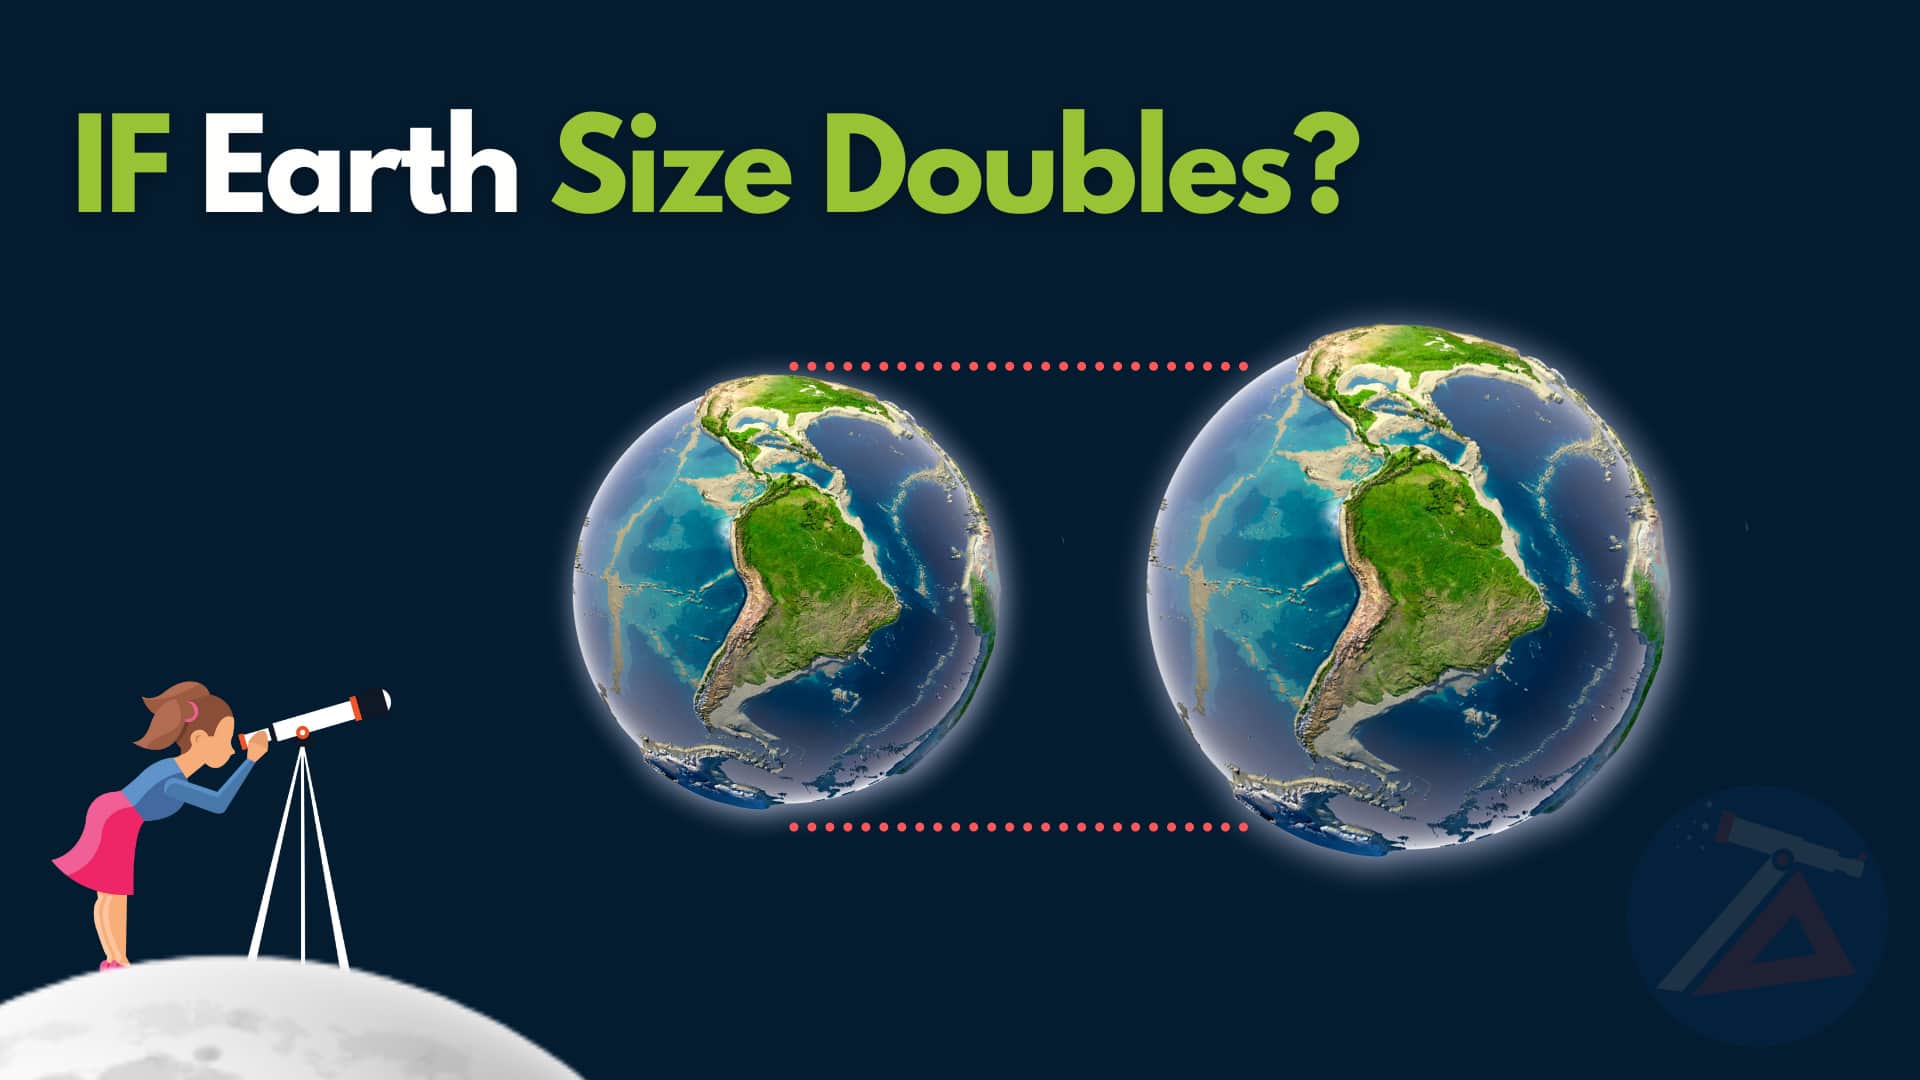 What if the size of the earth doubles - பூமியின் அளவு இரட்டிப்பாக இருந்தால்